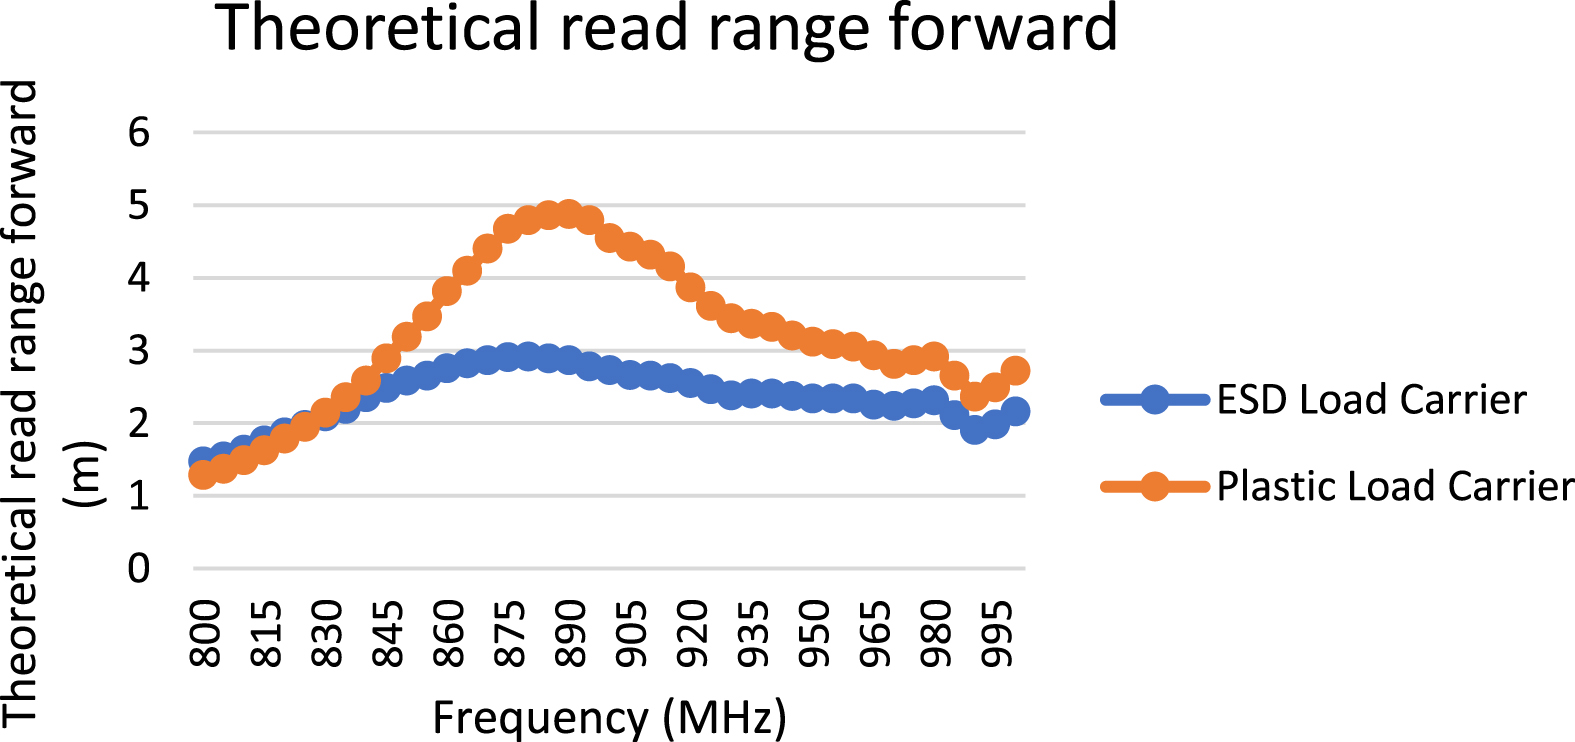 Theoretical read range forward ESD vs. plastic load carrier.